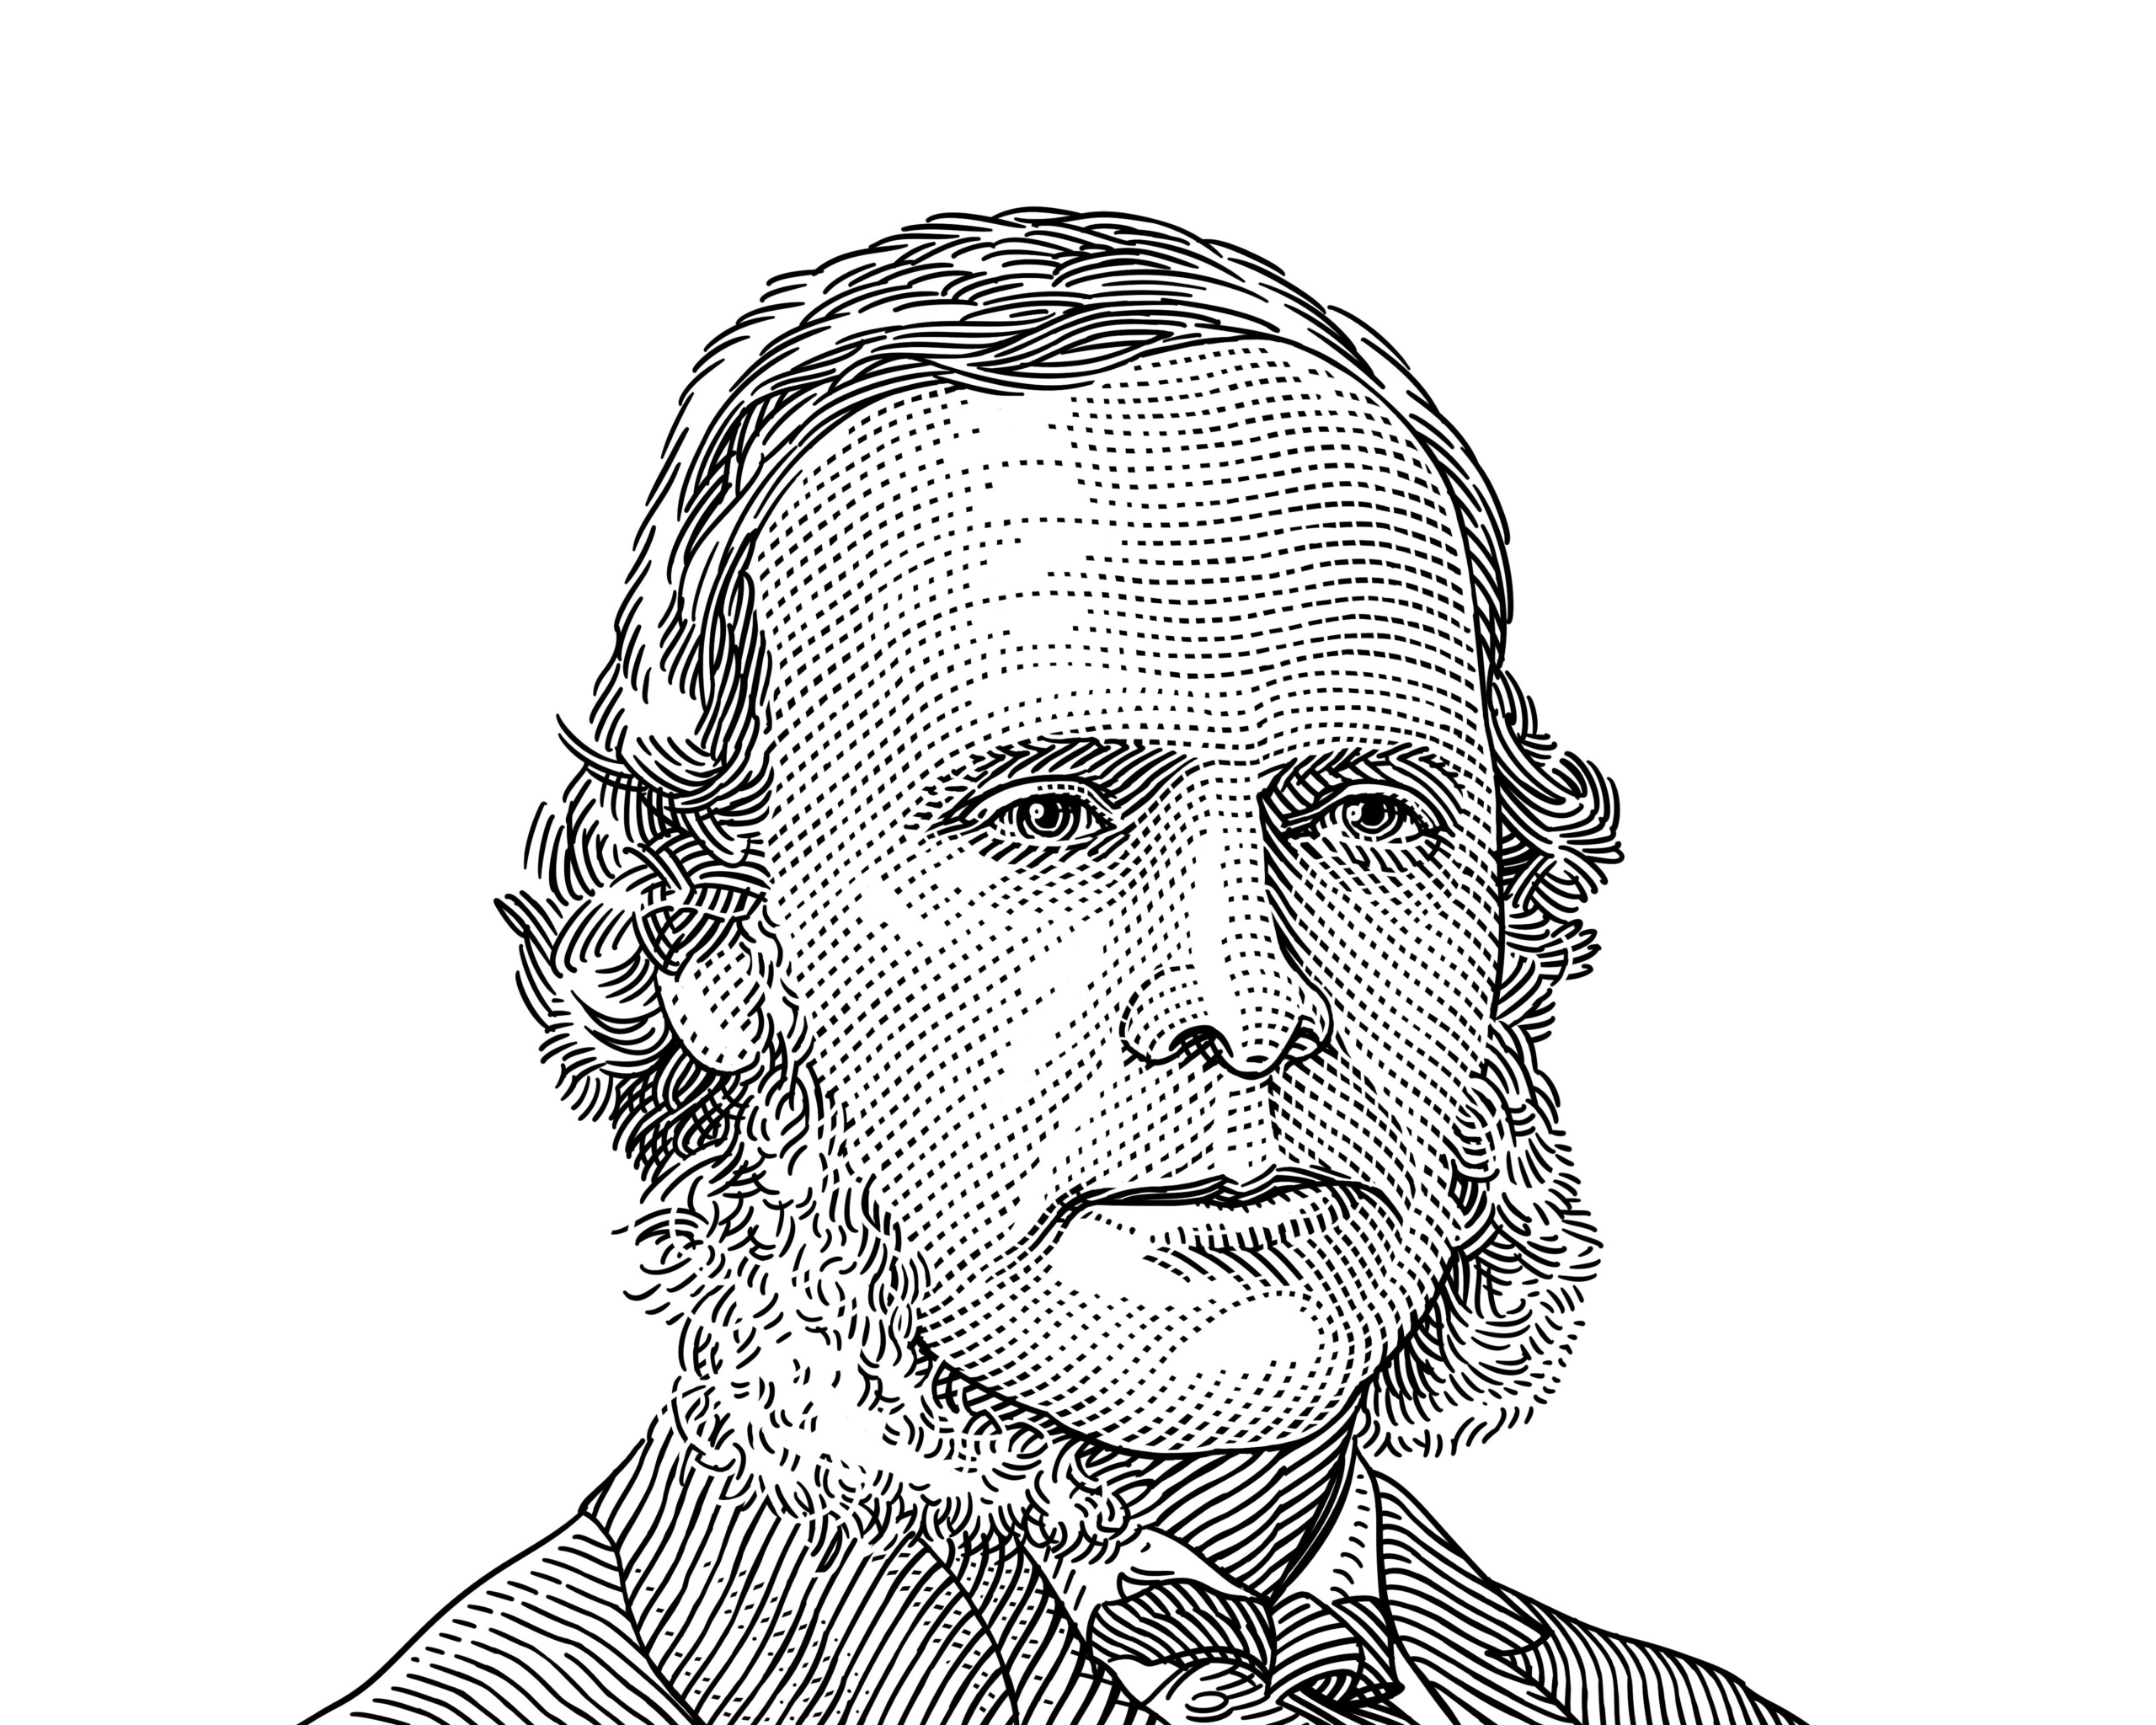 Heroes of Progress, Pt. 12: Joseph Lister - Human Progress